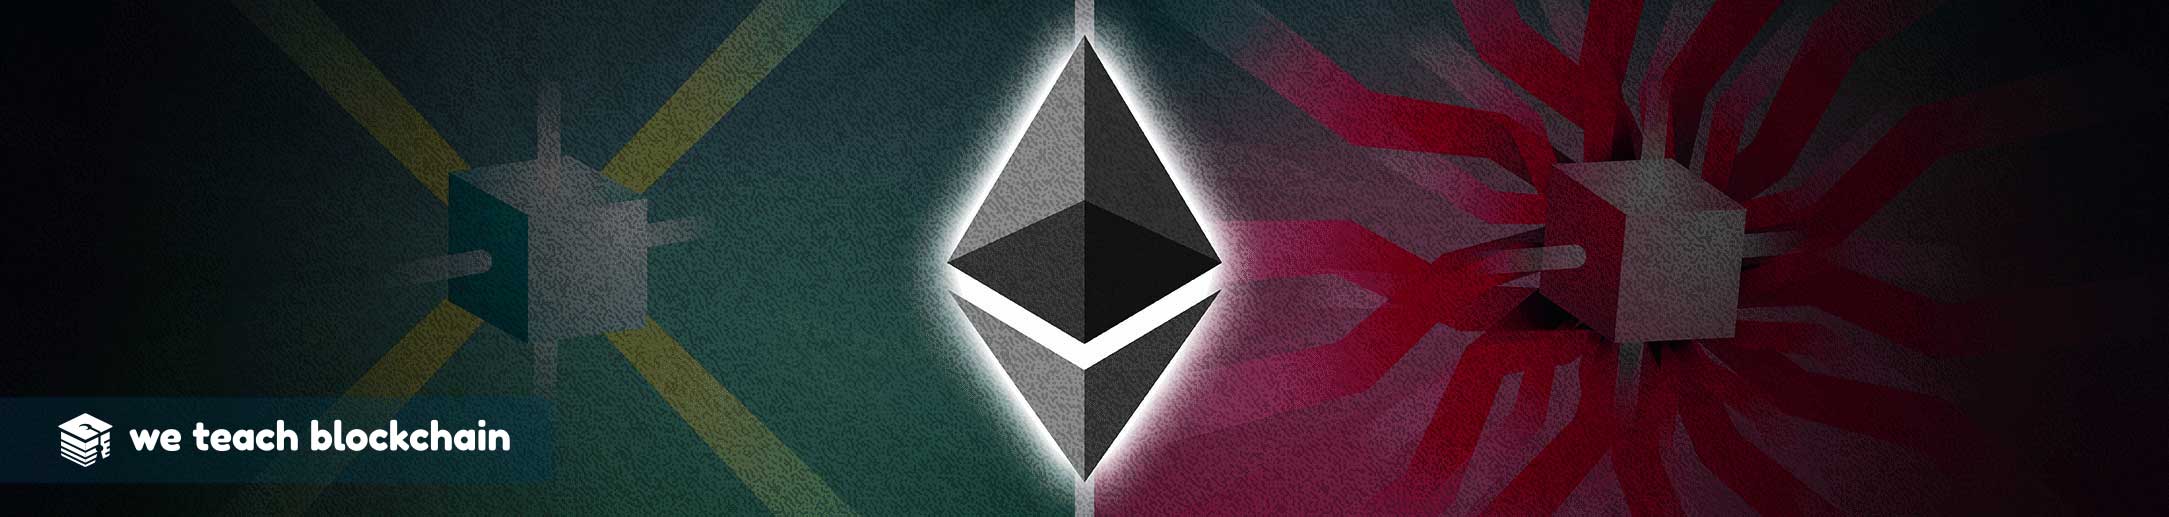 Ethereum logo over first image